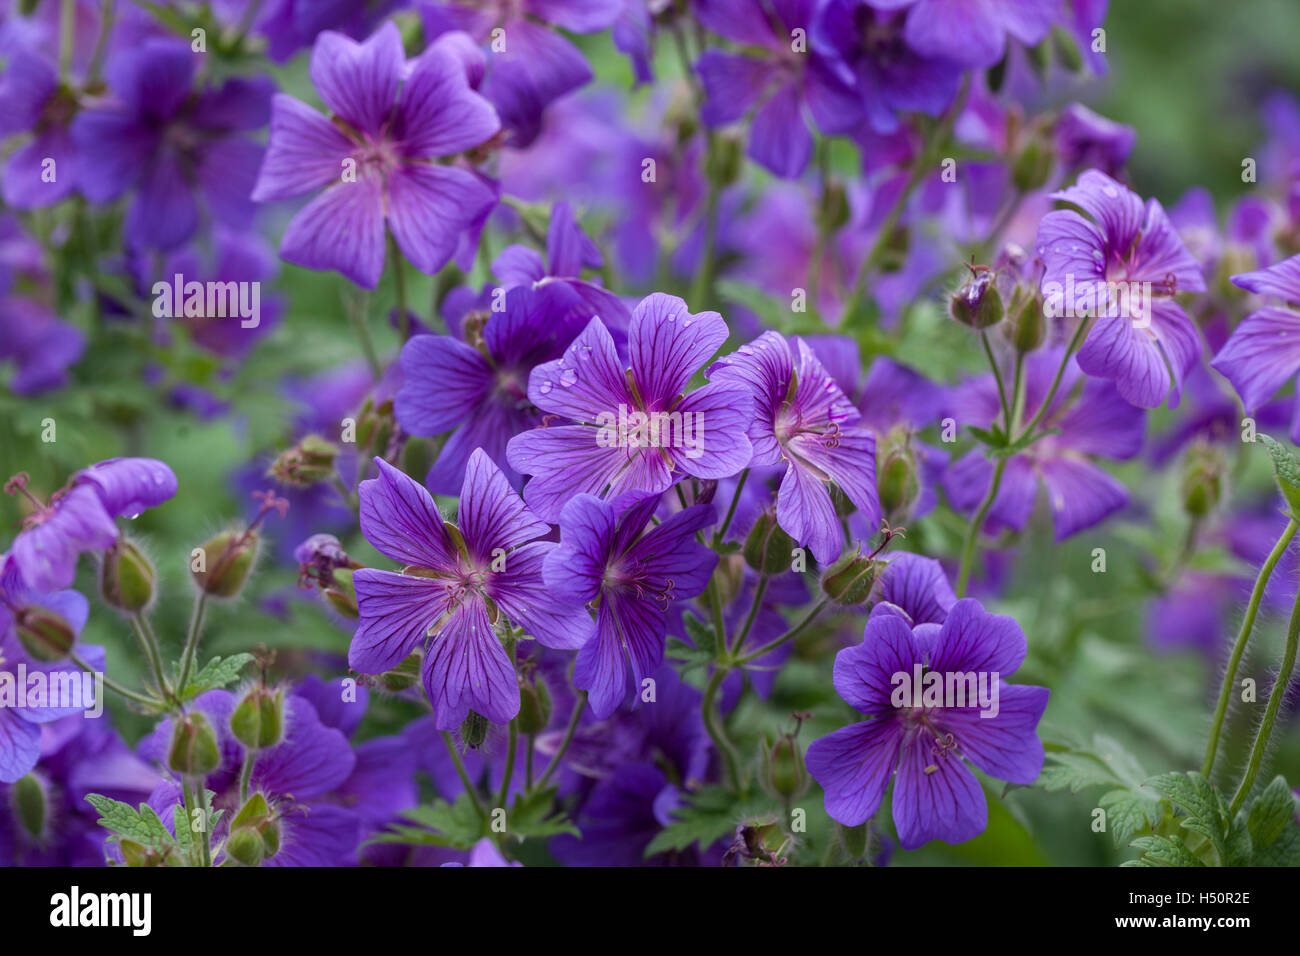 Hardy Purple Cranesbill Geranium flowering in an English garden, UK Stock Photo